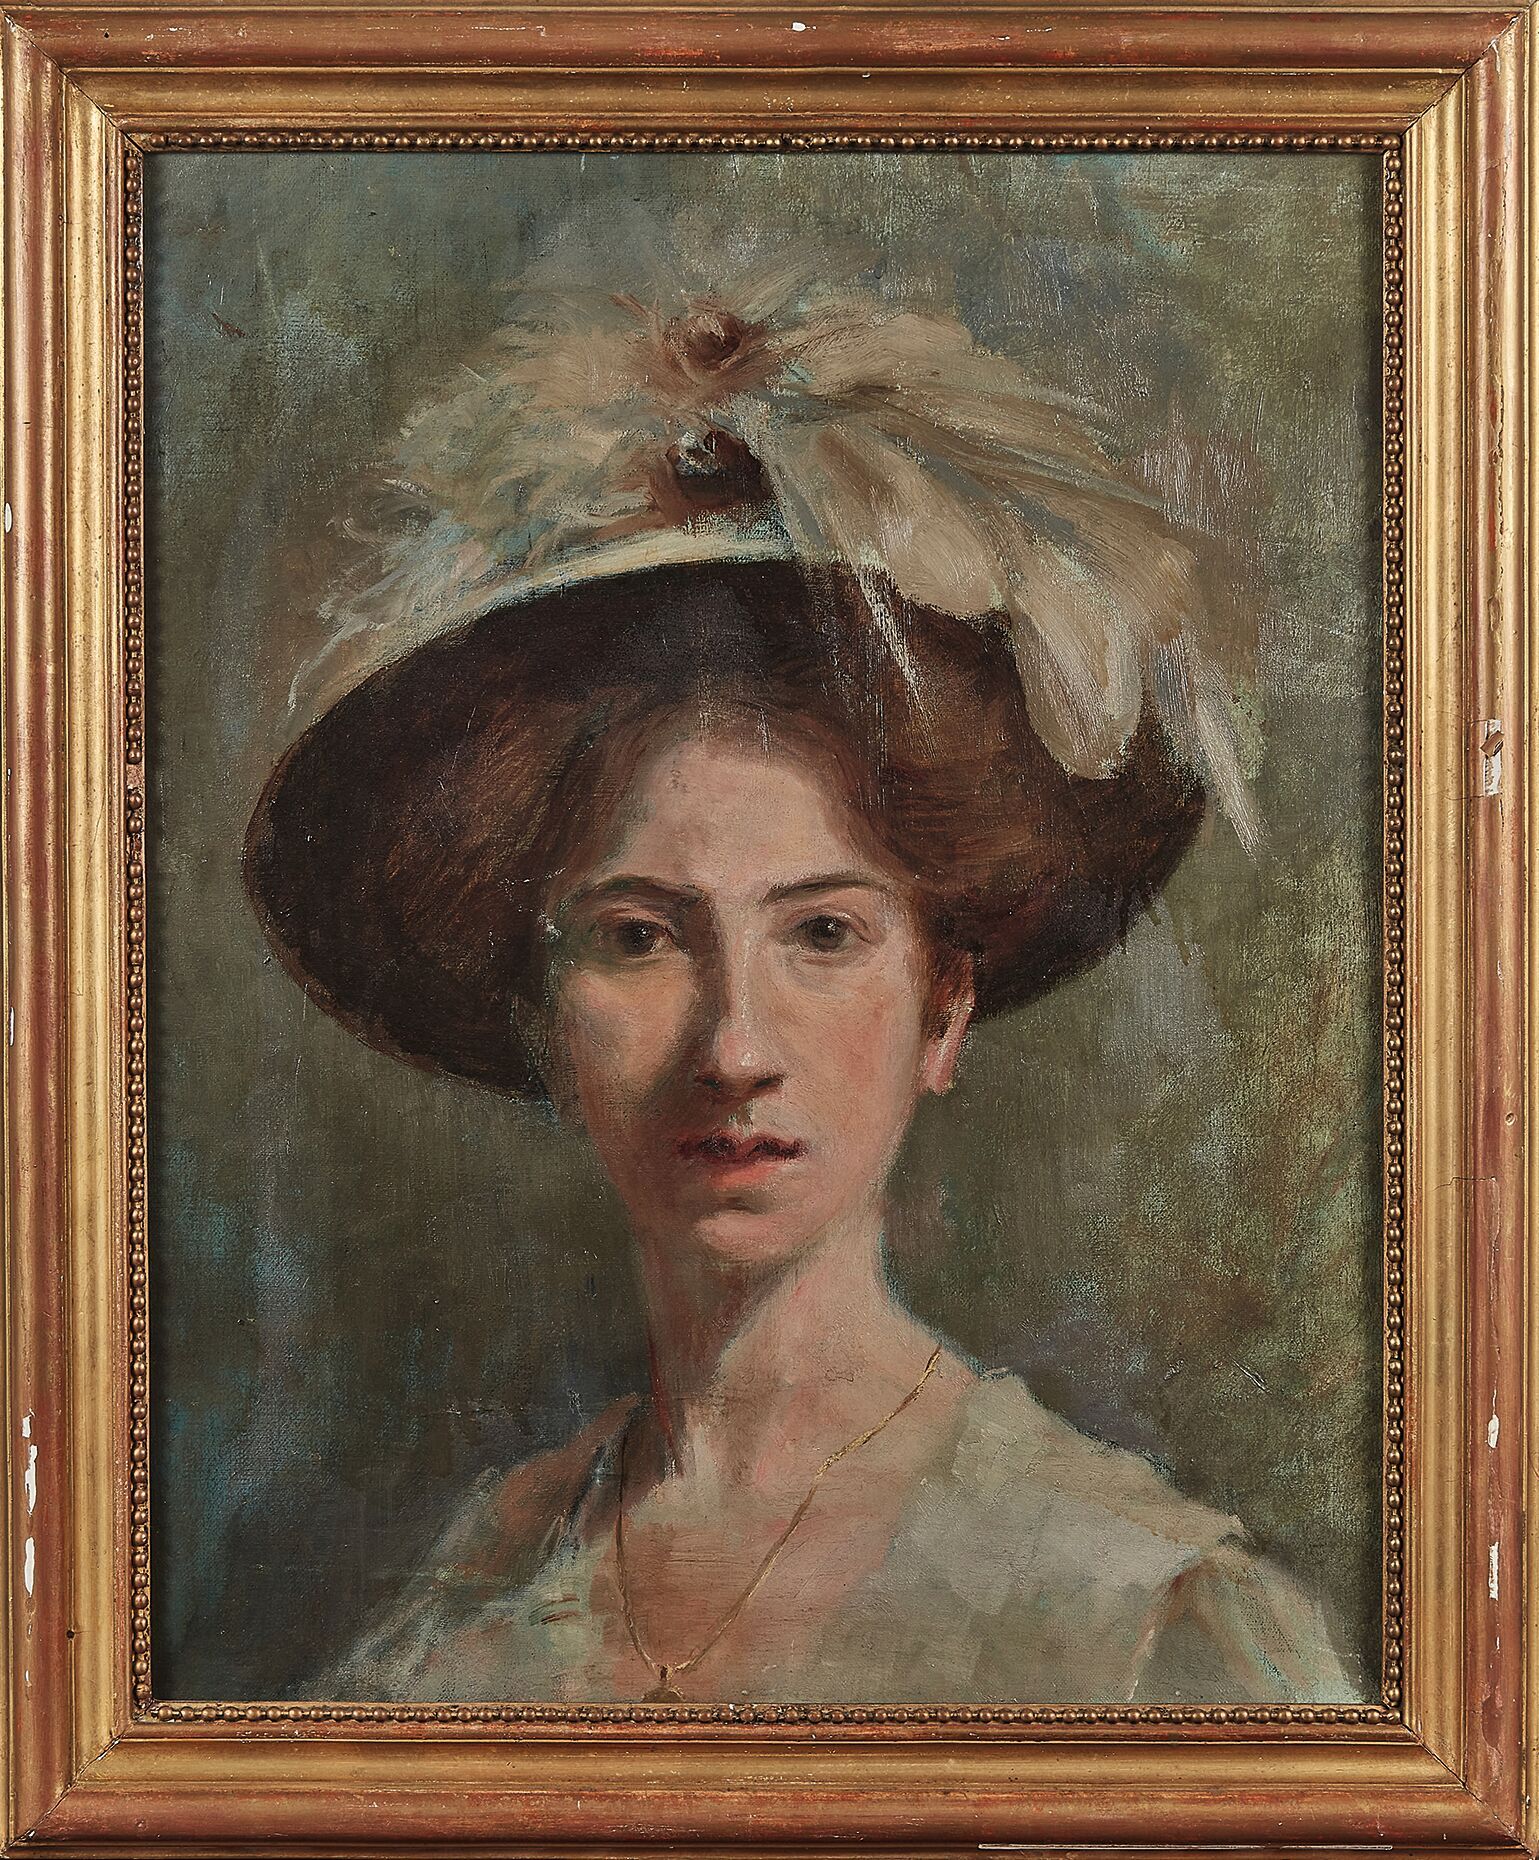 Null 现代学校
戴帽子的女人的画像
布面油画。
55 x 46 cm